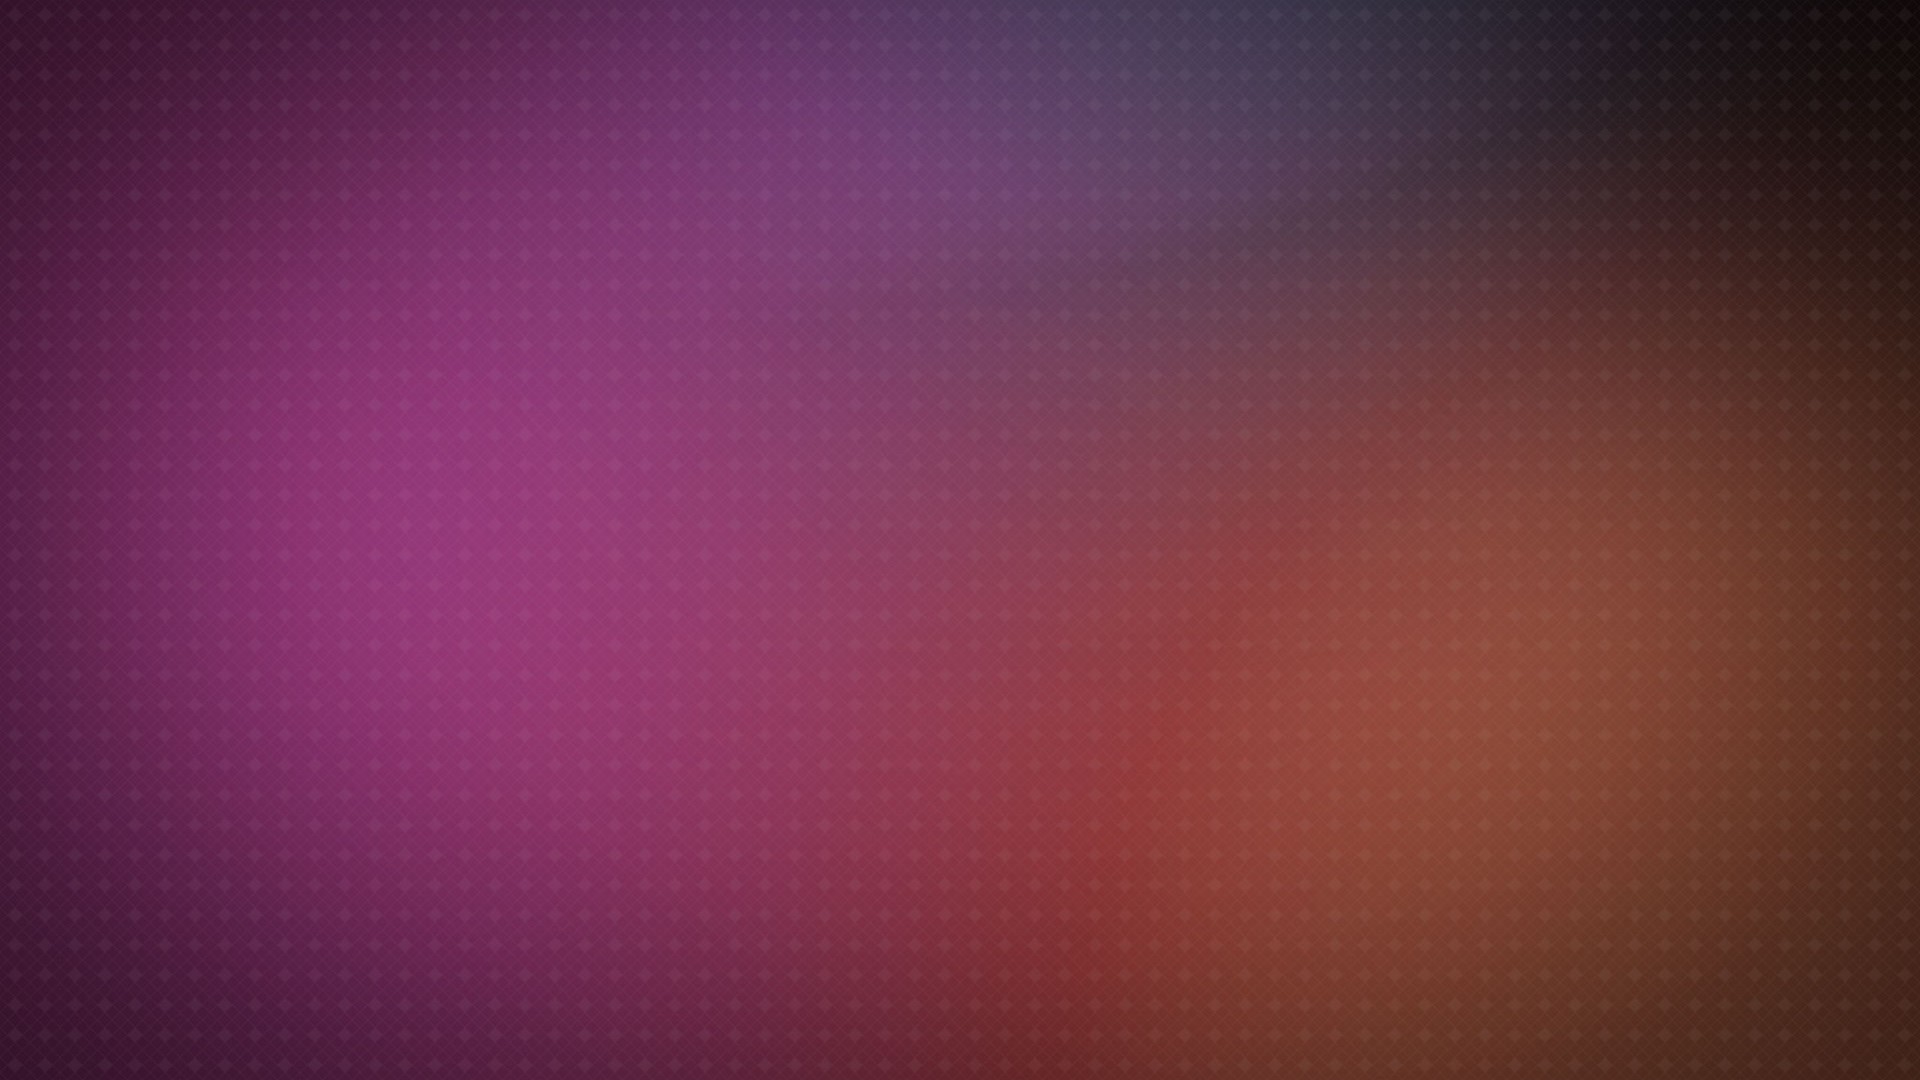 1920x1080 ... background; purple, red, black